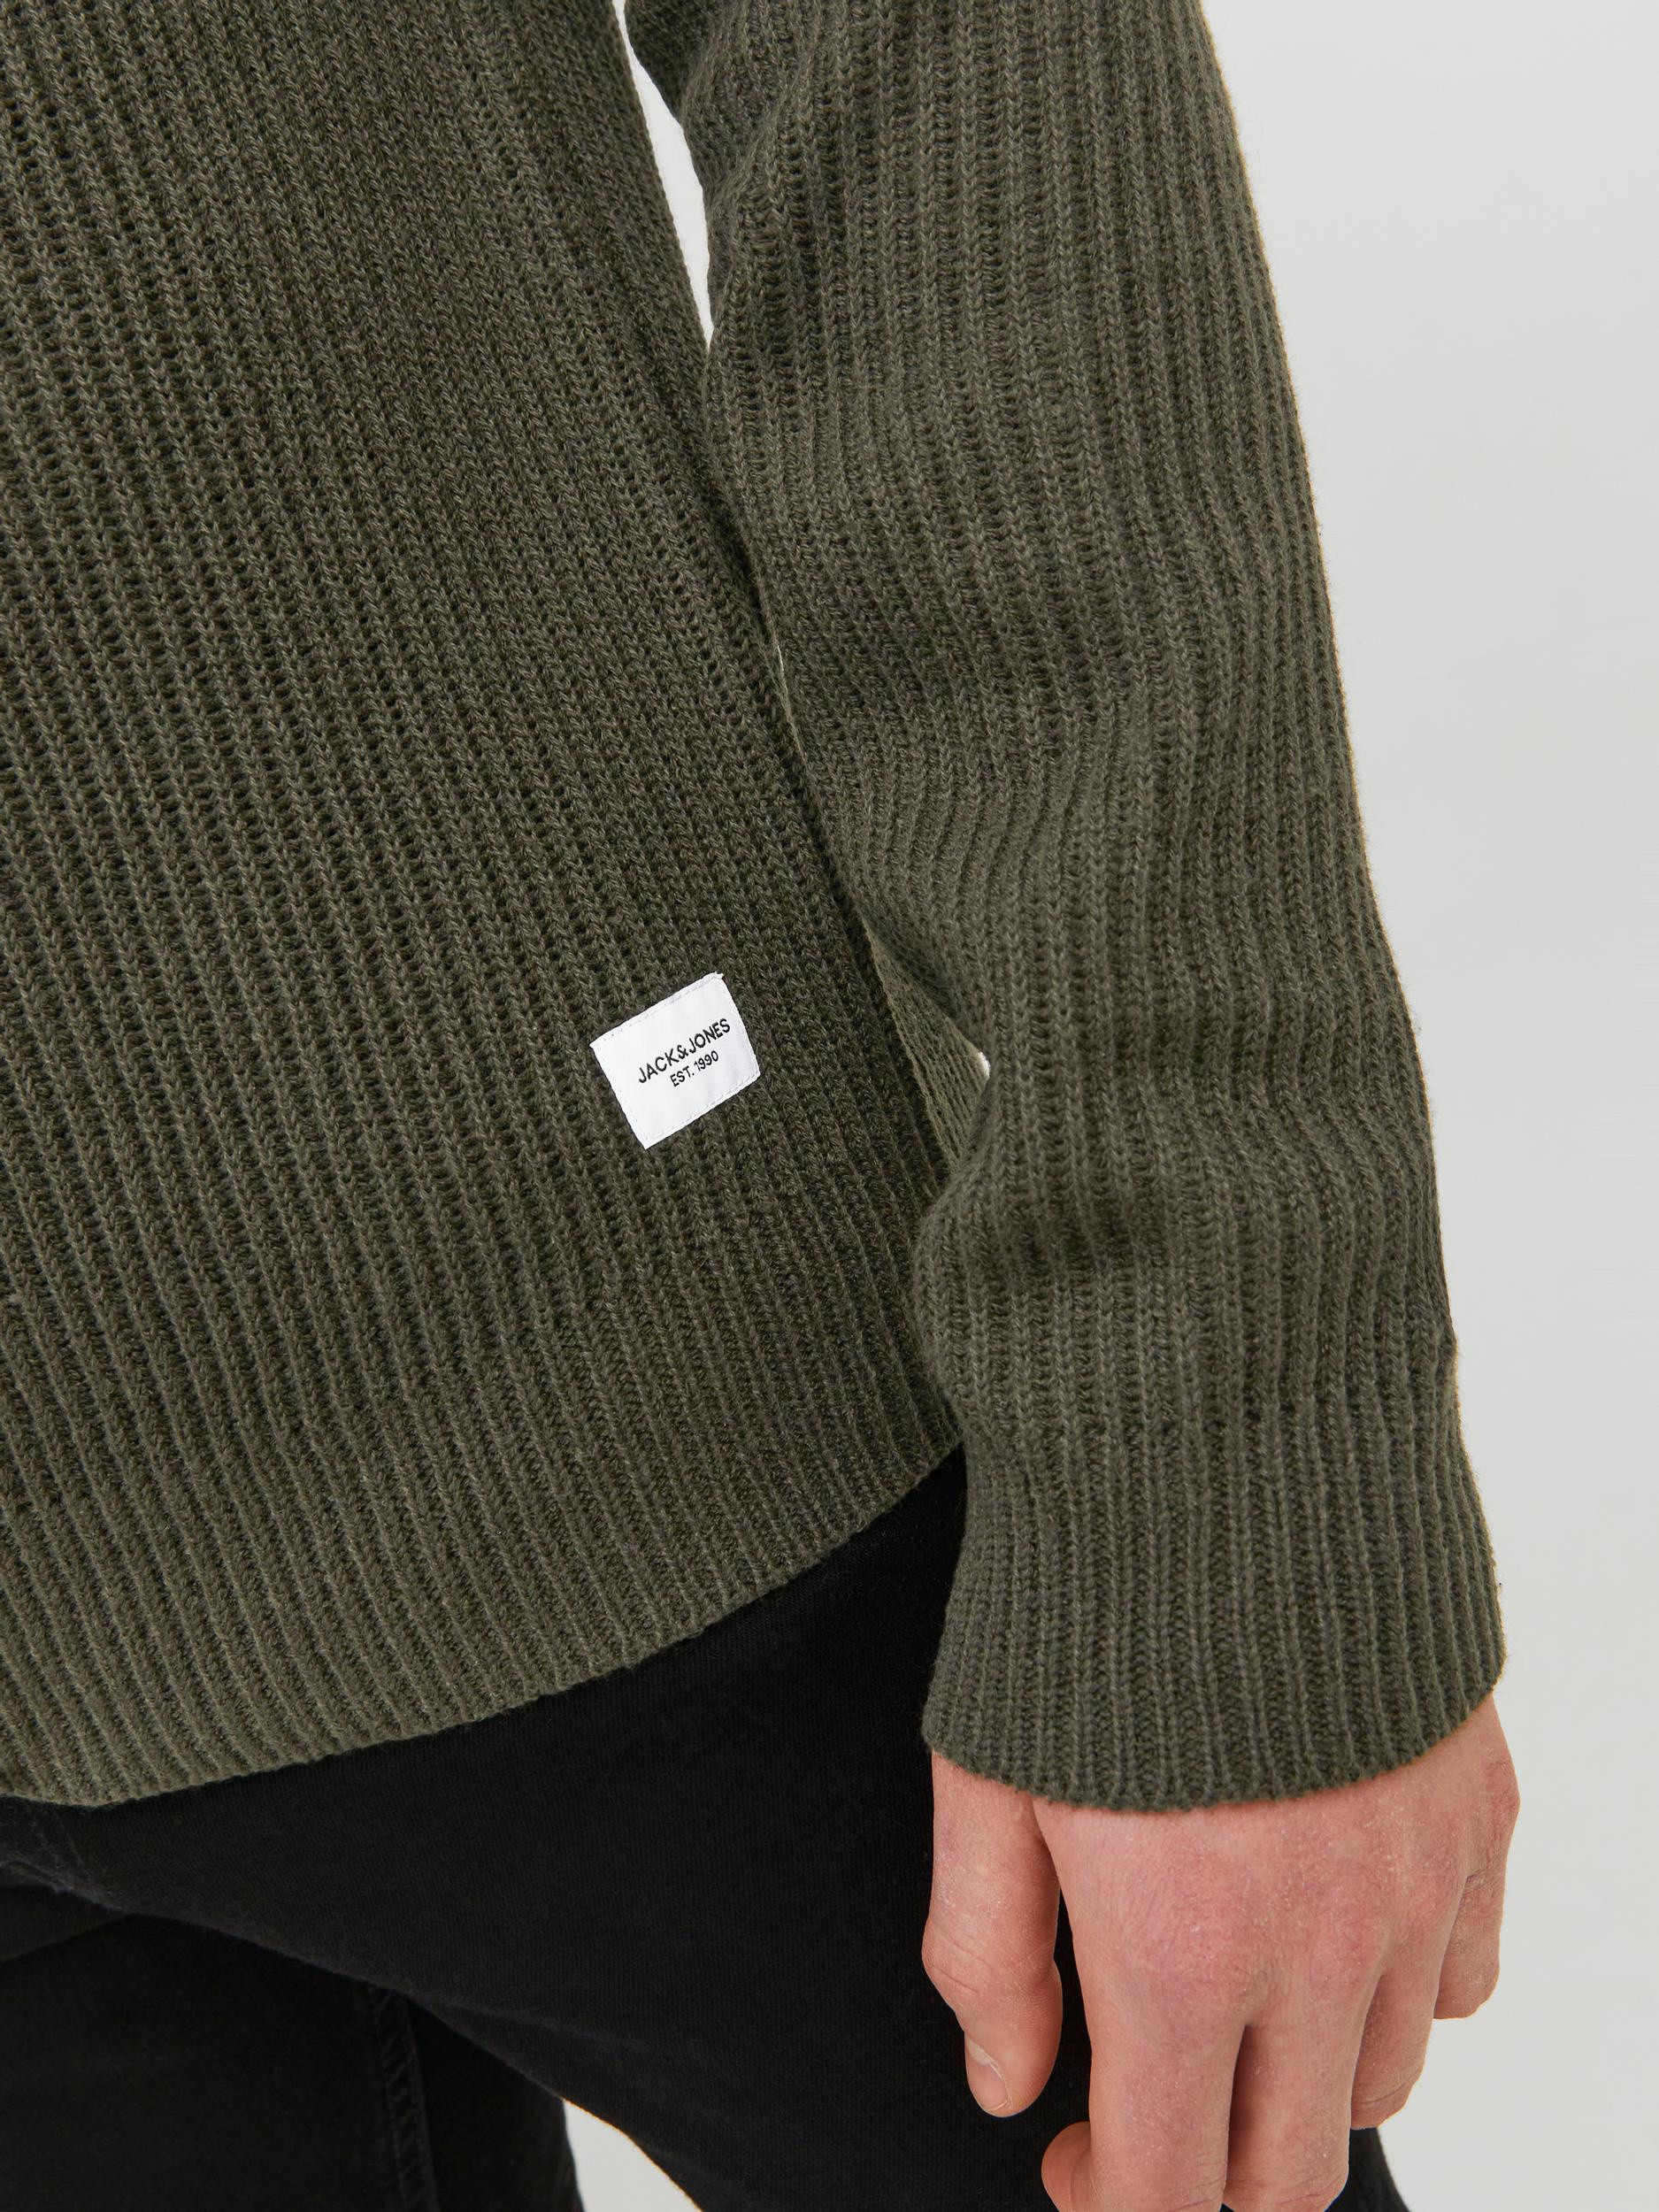 Jack & Jones - Pullover lavorato a maglia a coste, Verde scuro, large image number 6